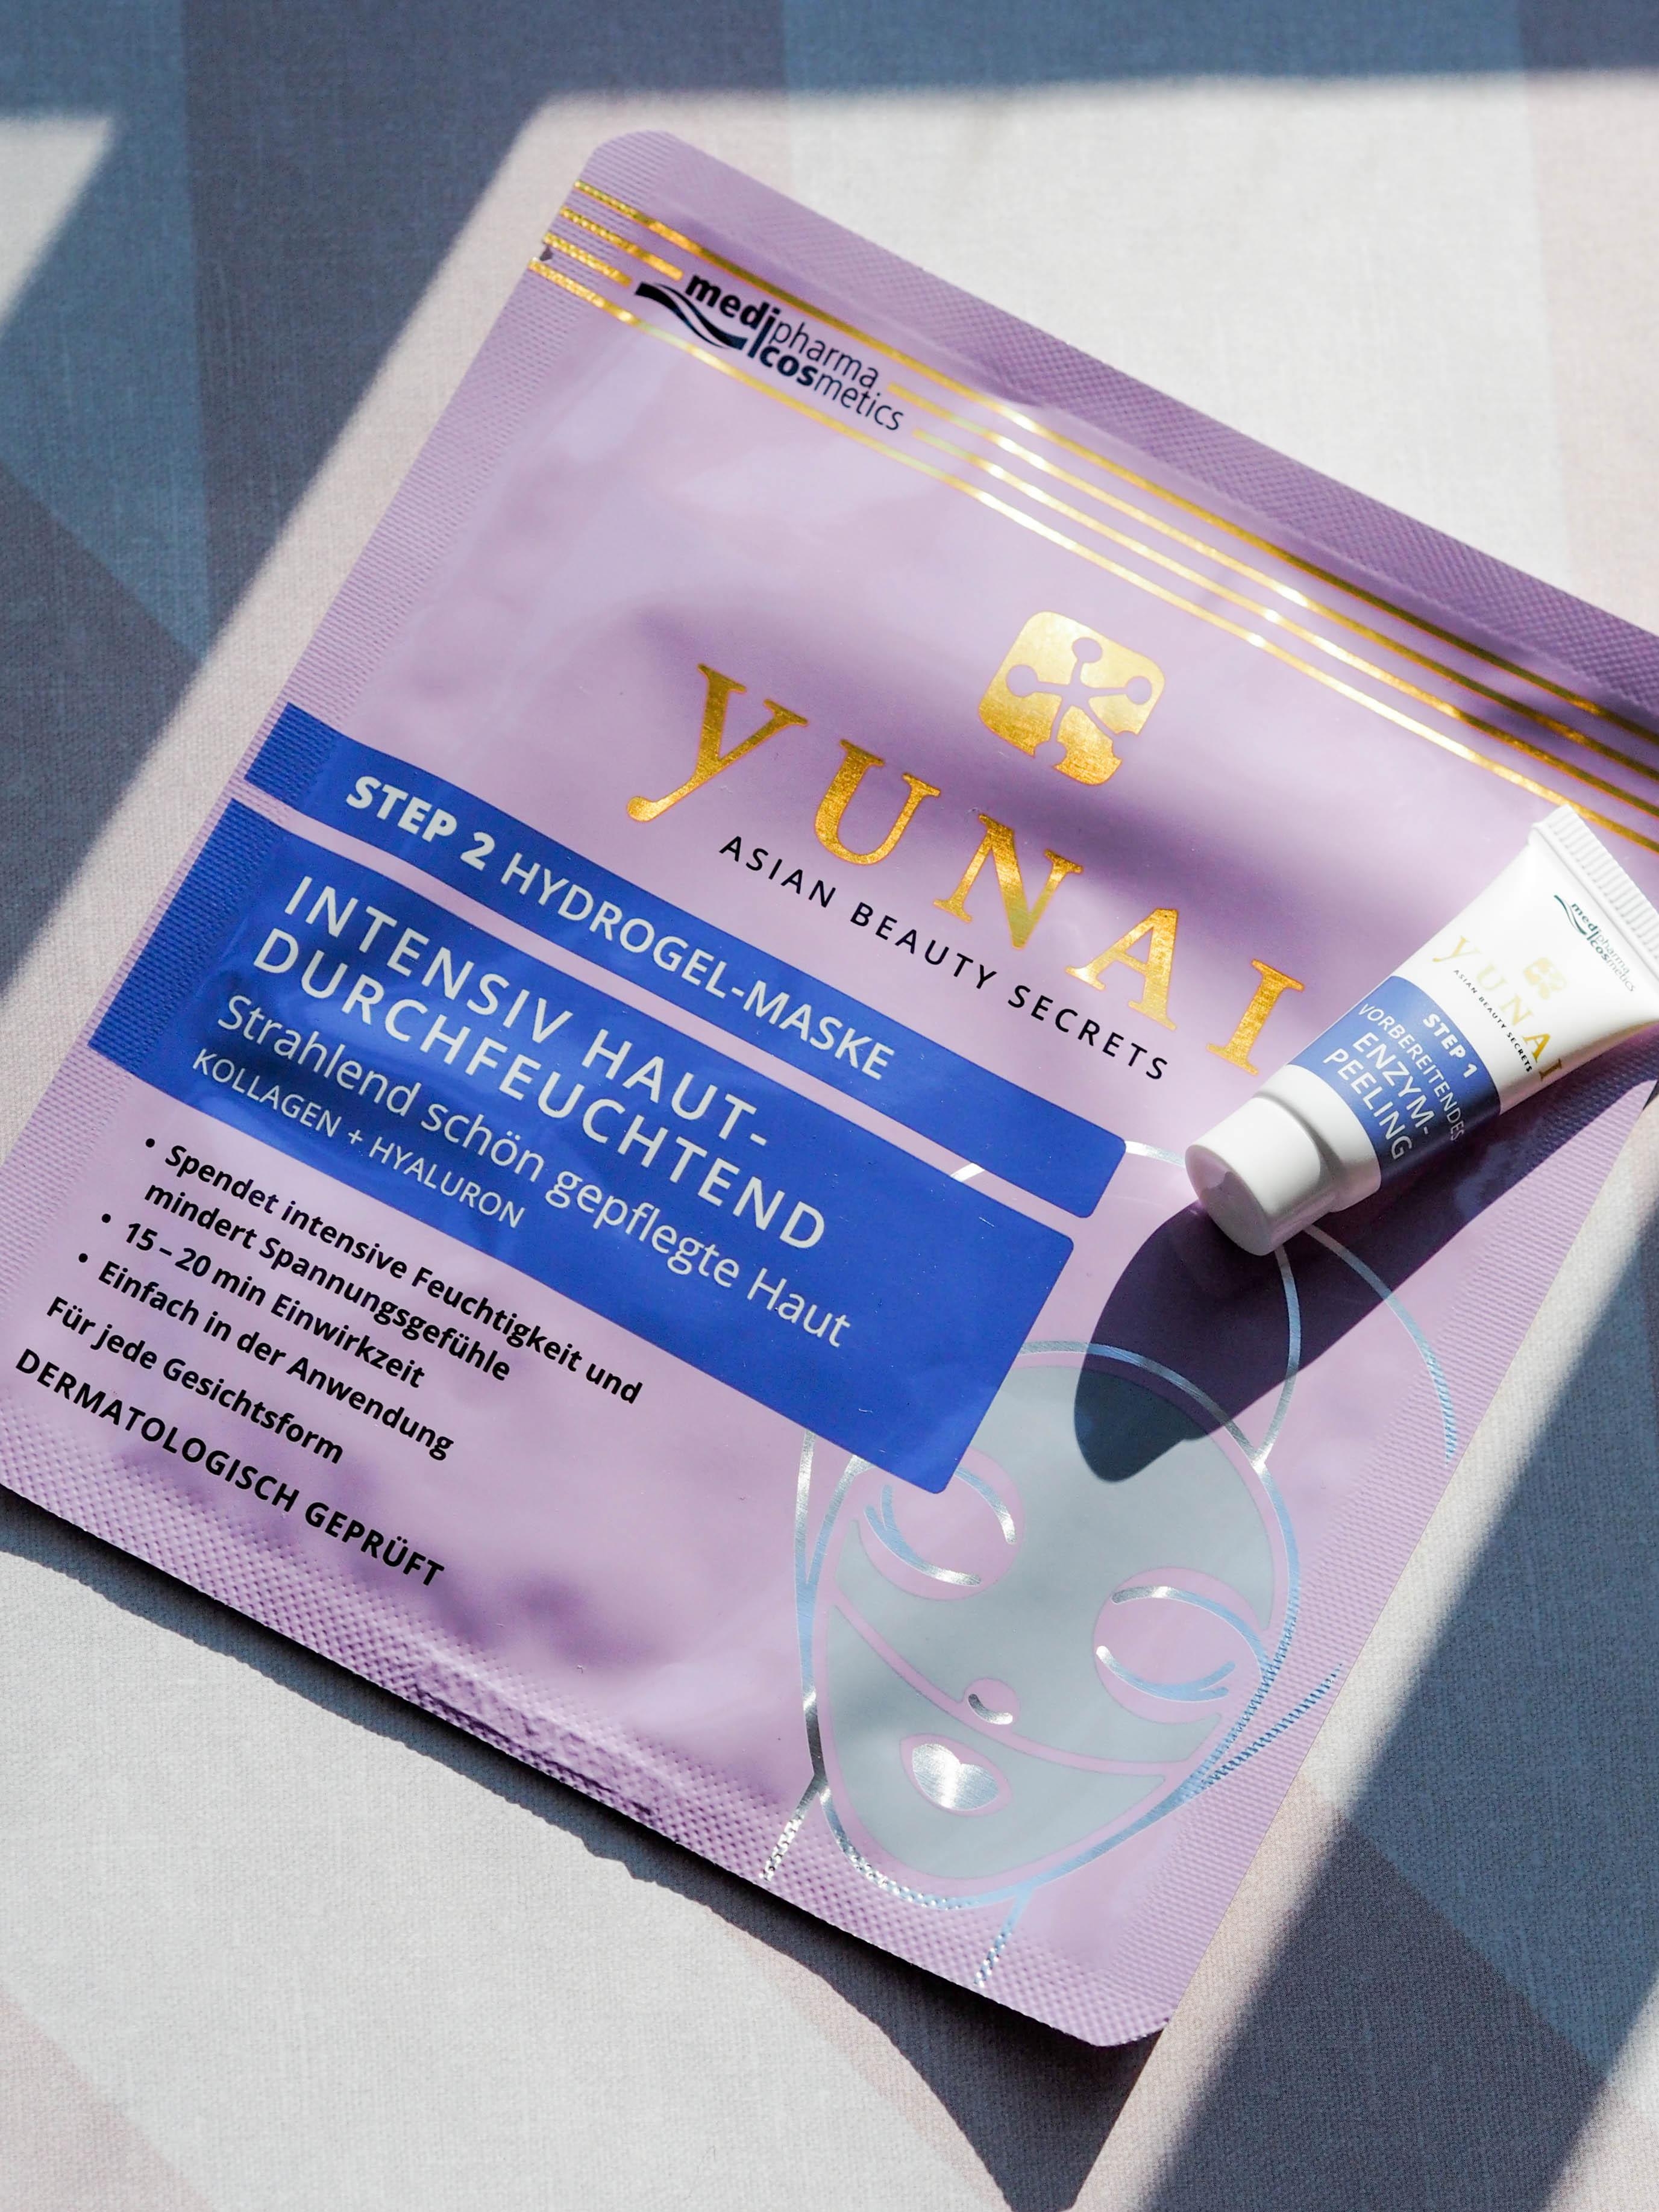 Die neue Linie bei Medipharma Cosmetics "Yunai" setzt auf asiatische Pflegerituale #beautylieblinge #medipharmacosmetics